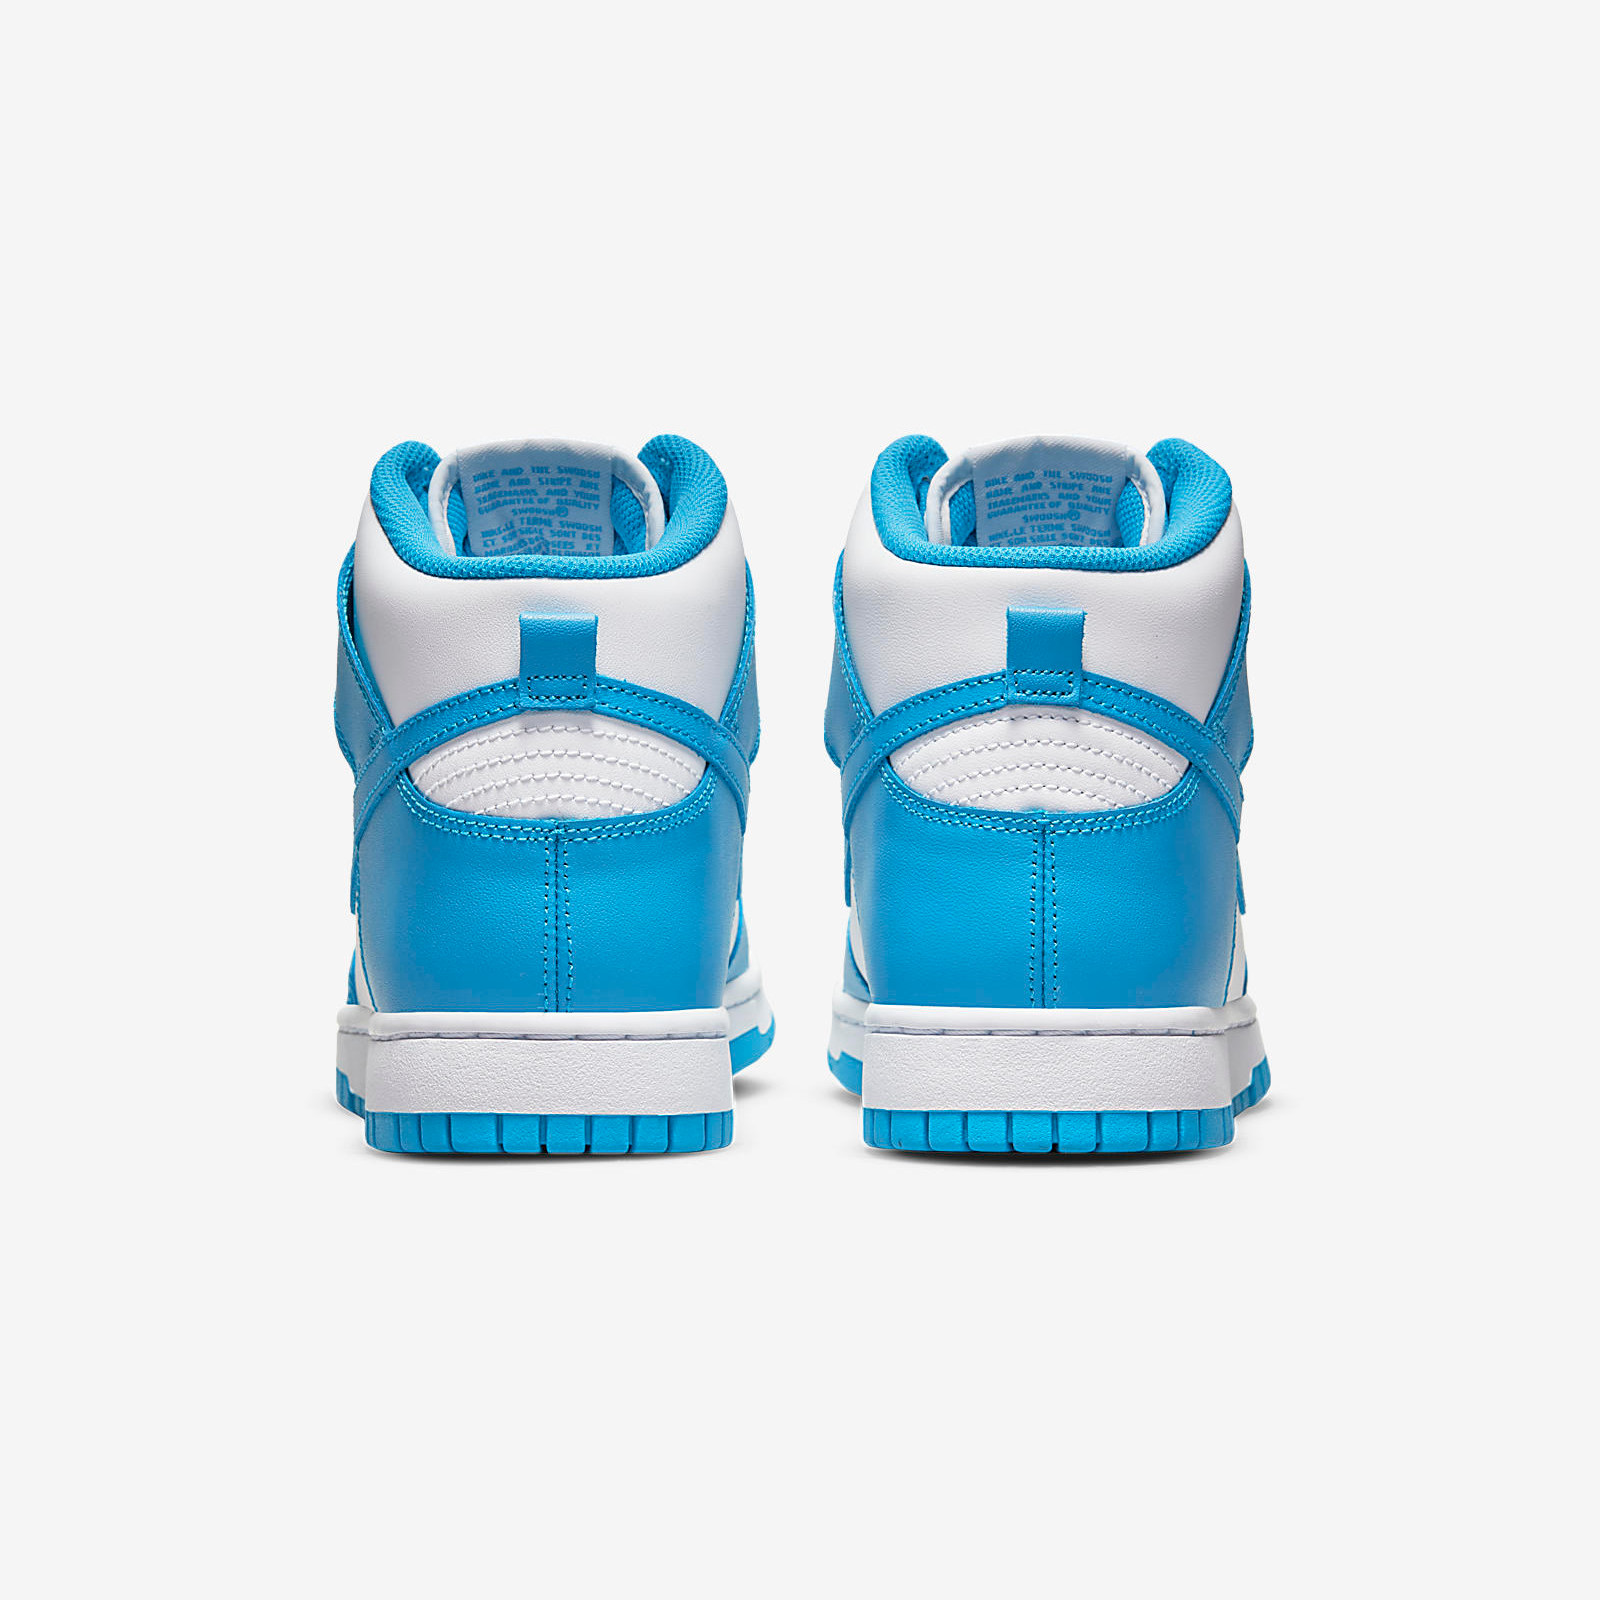 Nike Dunk High
« Laser Blue »